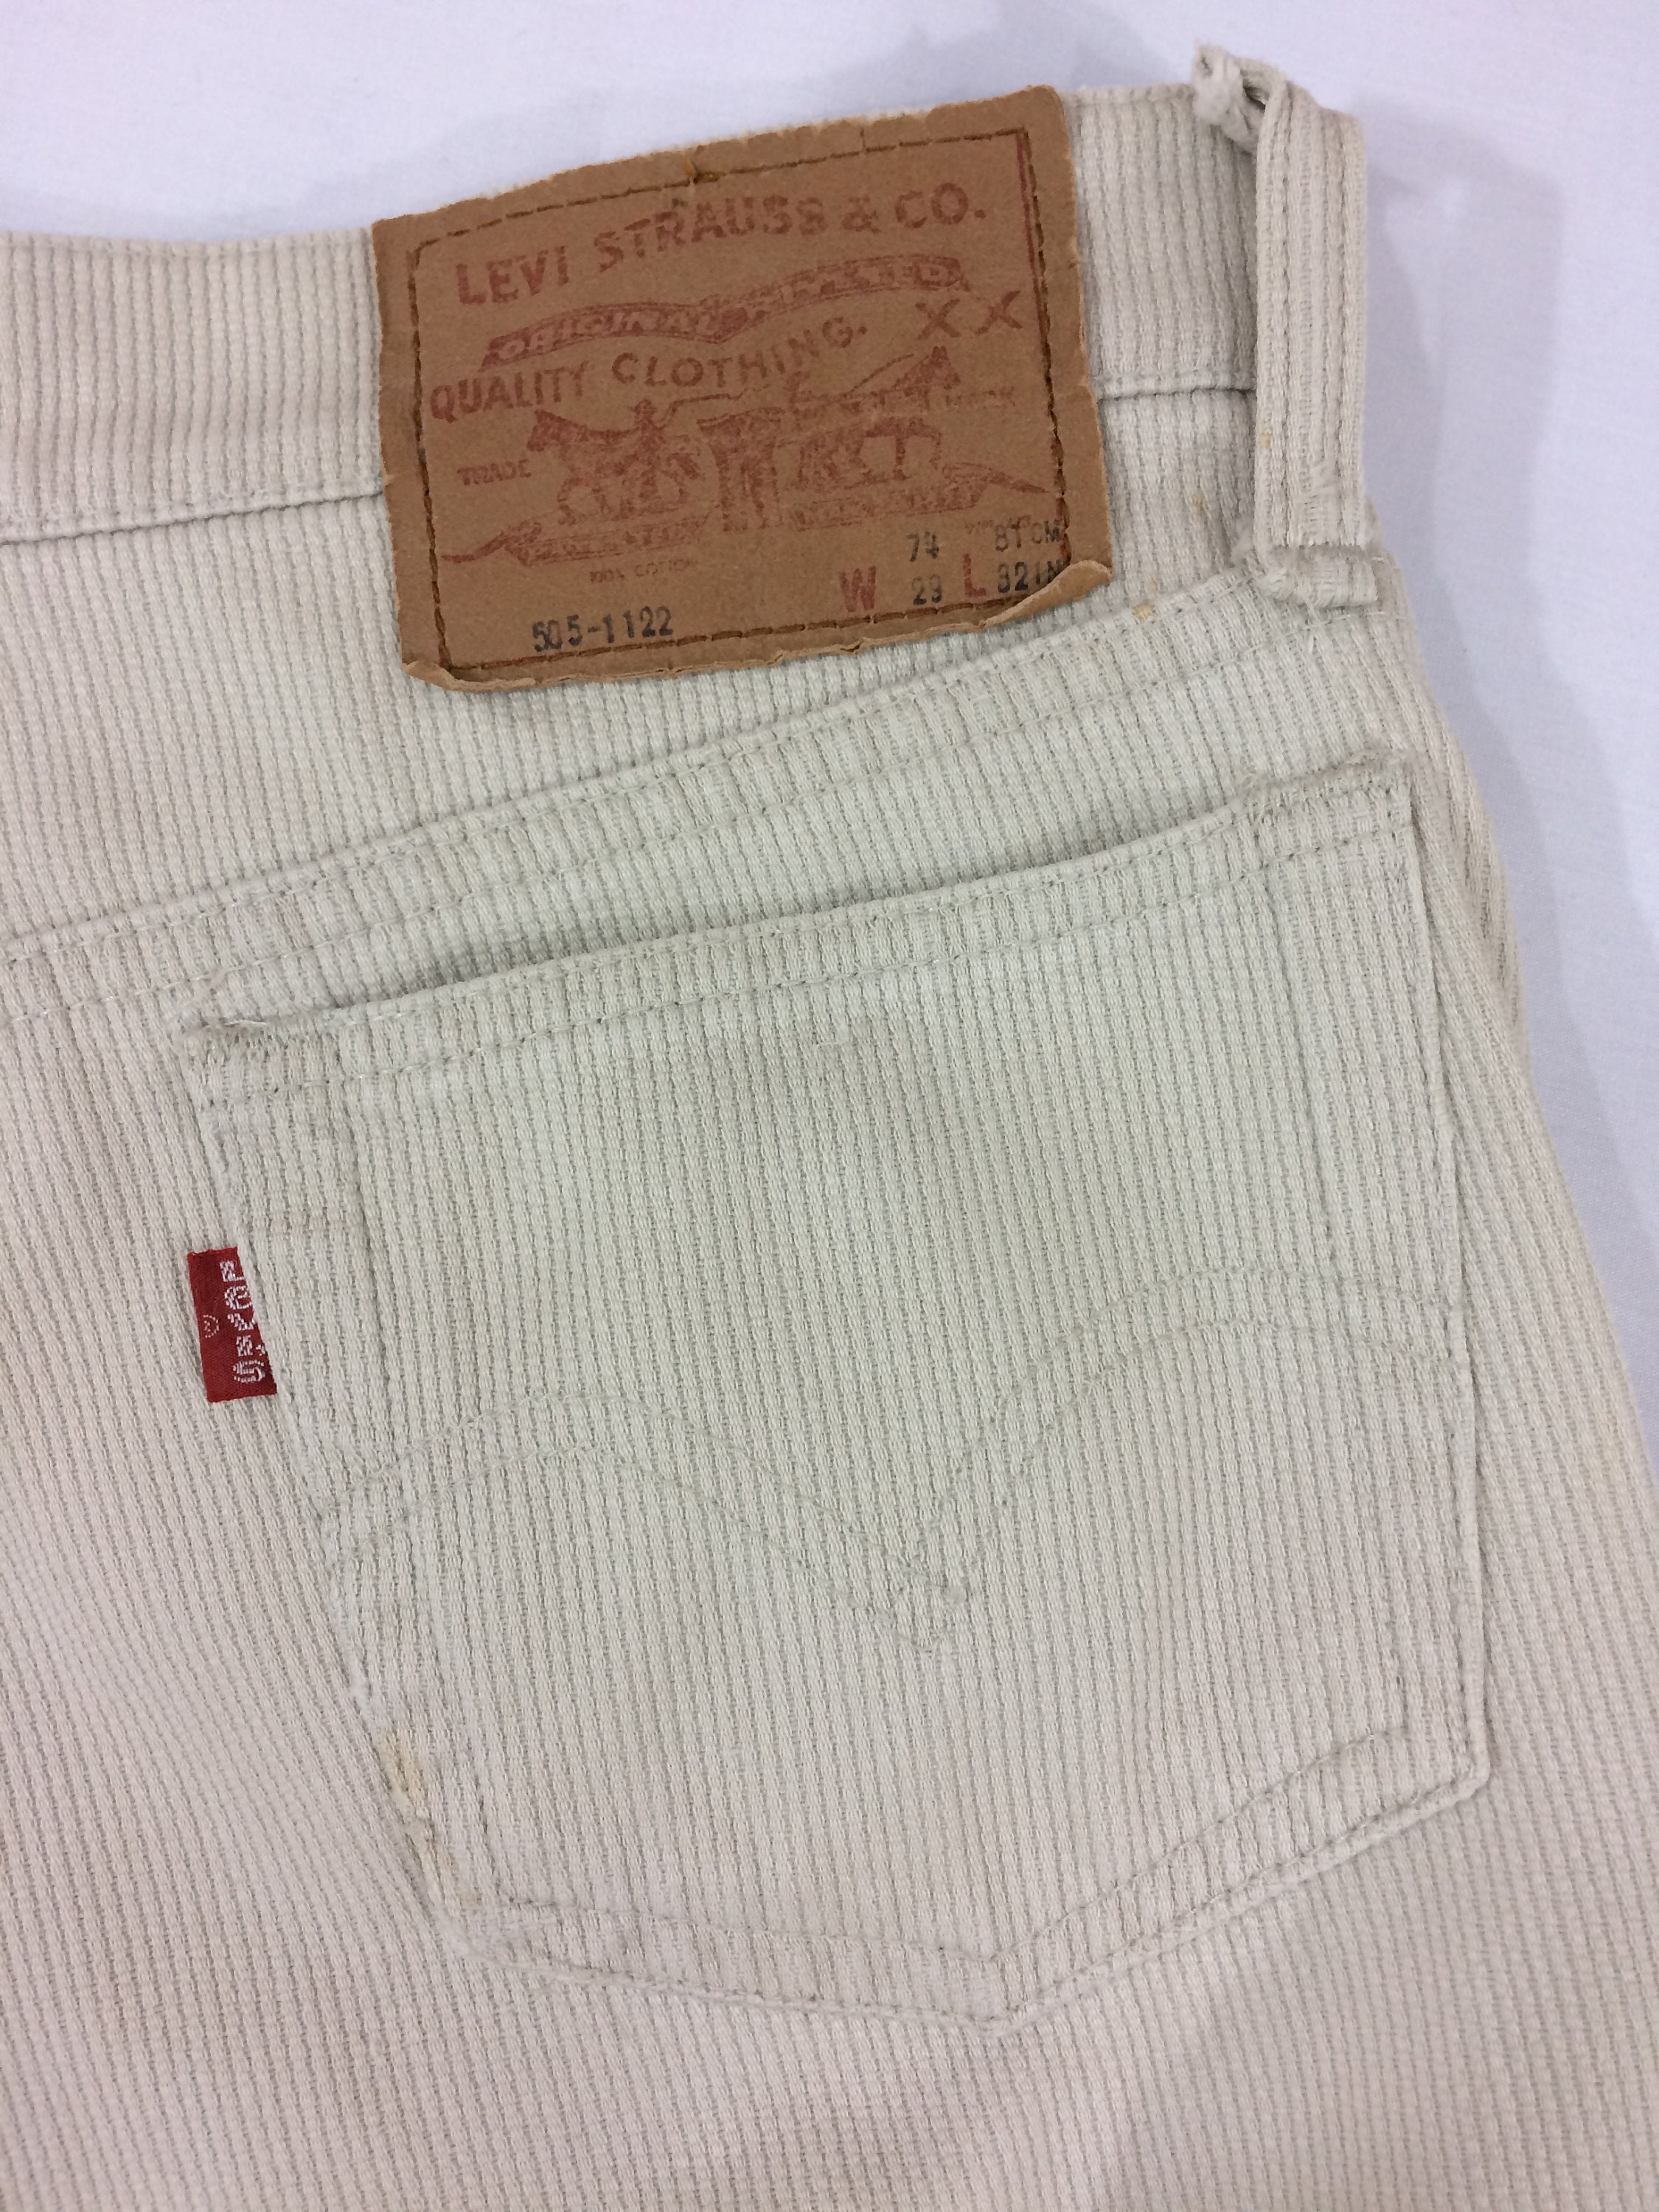 Sz 28 Vintage Levis 505 Corduroy Jeans W28 L29 High Waist - Etsy